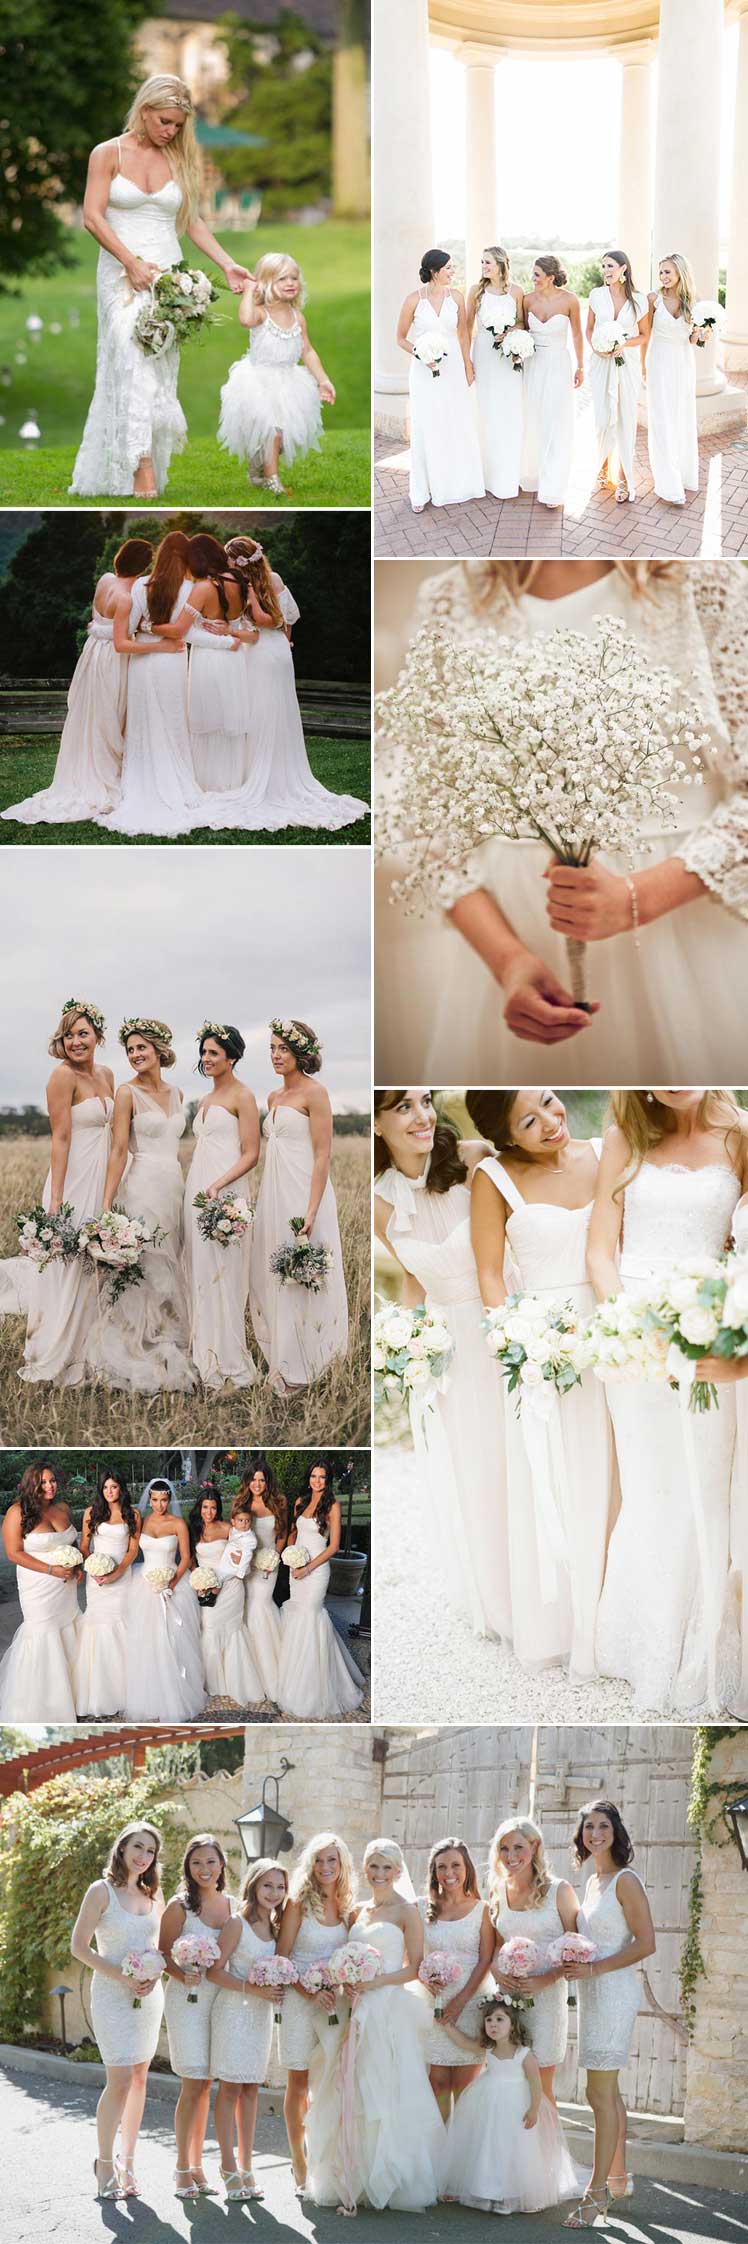 White bridesmaid dress ideas